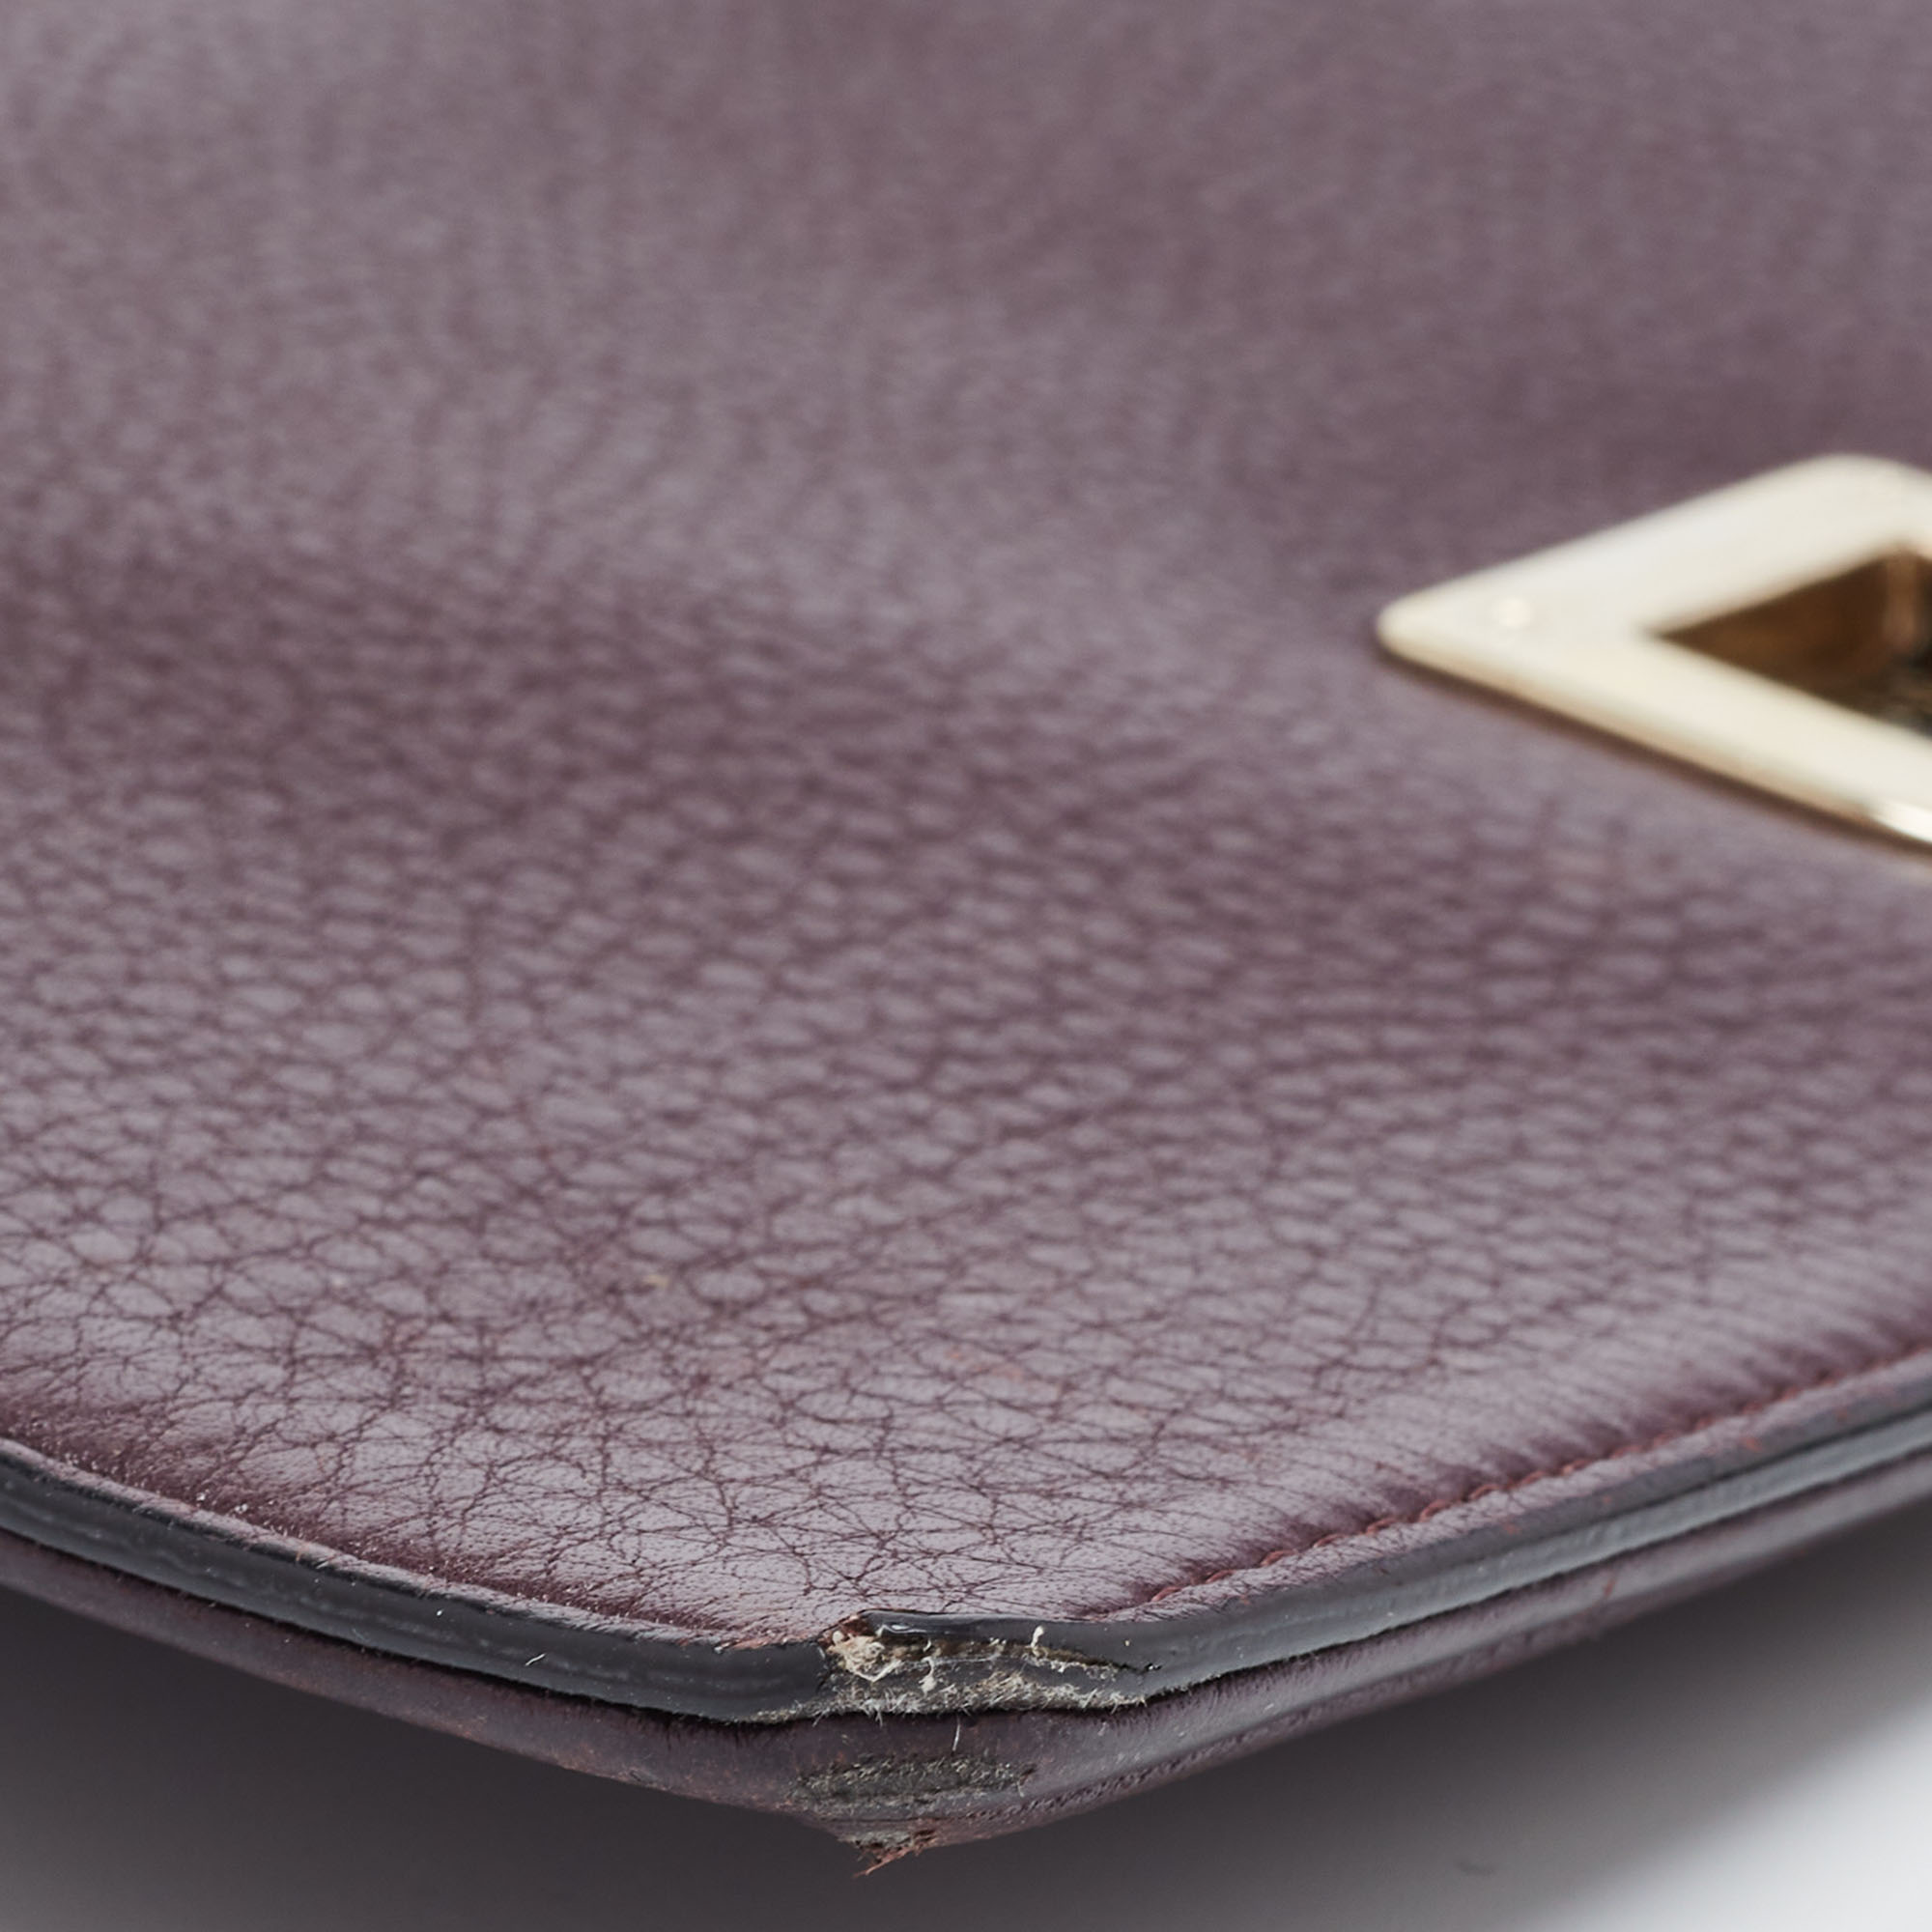 Dior Burgundy Leather Medium Diorama Shoulder Bag